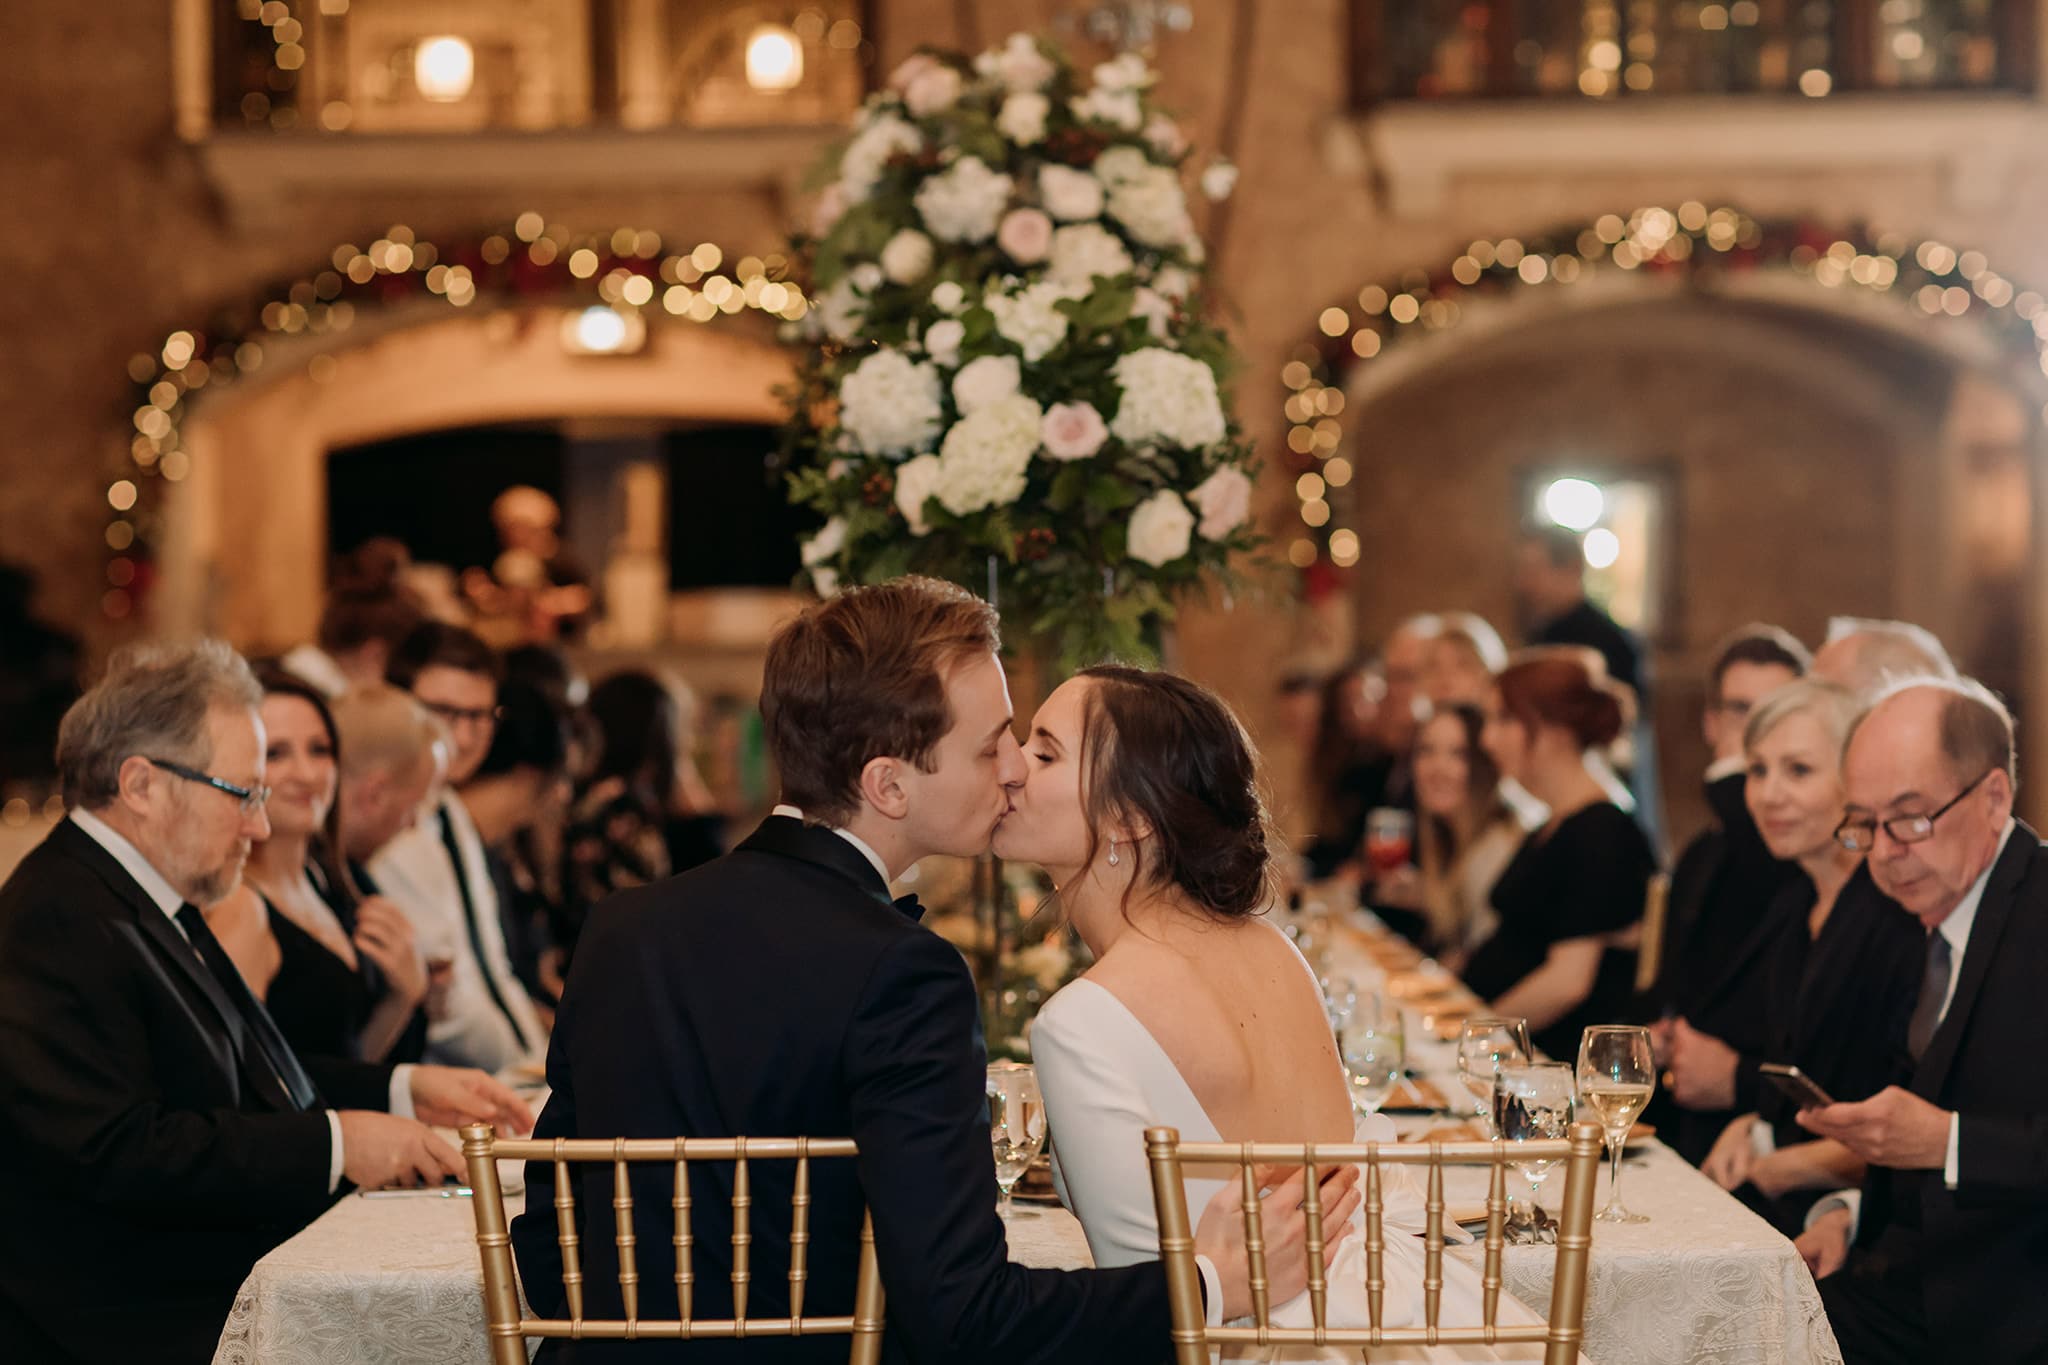 Fairmont Banff Springs winter wedding reception Mt Stephen Hall bride groom kissing at table